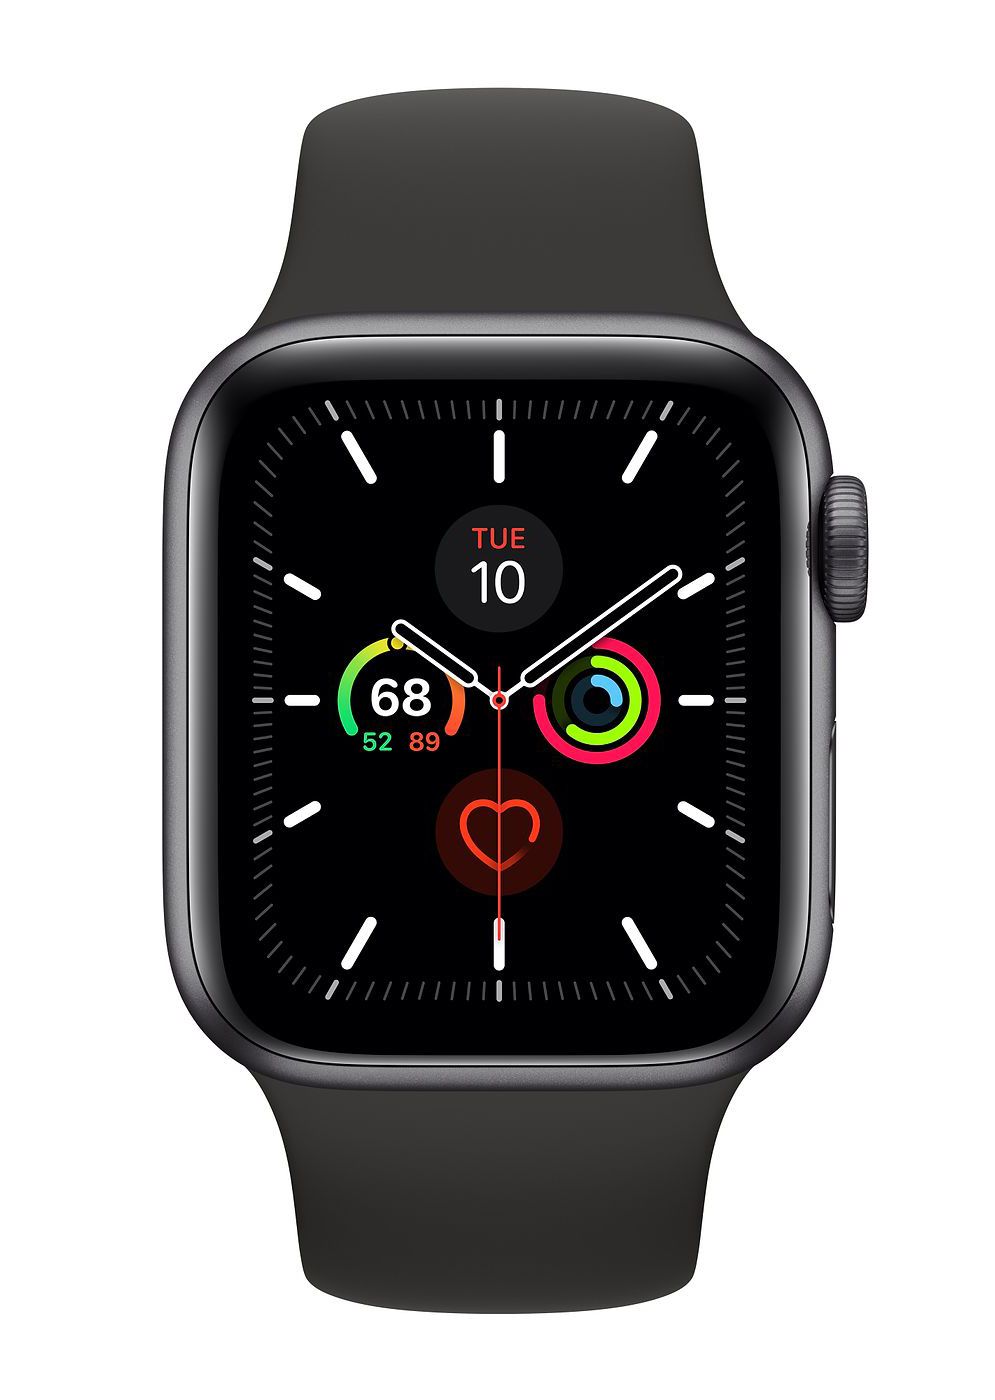 orologio digitale uomo orologi smartwatch Apple digitali nuovi modelli novita orologio uomo orologi orologio digitale